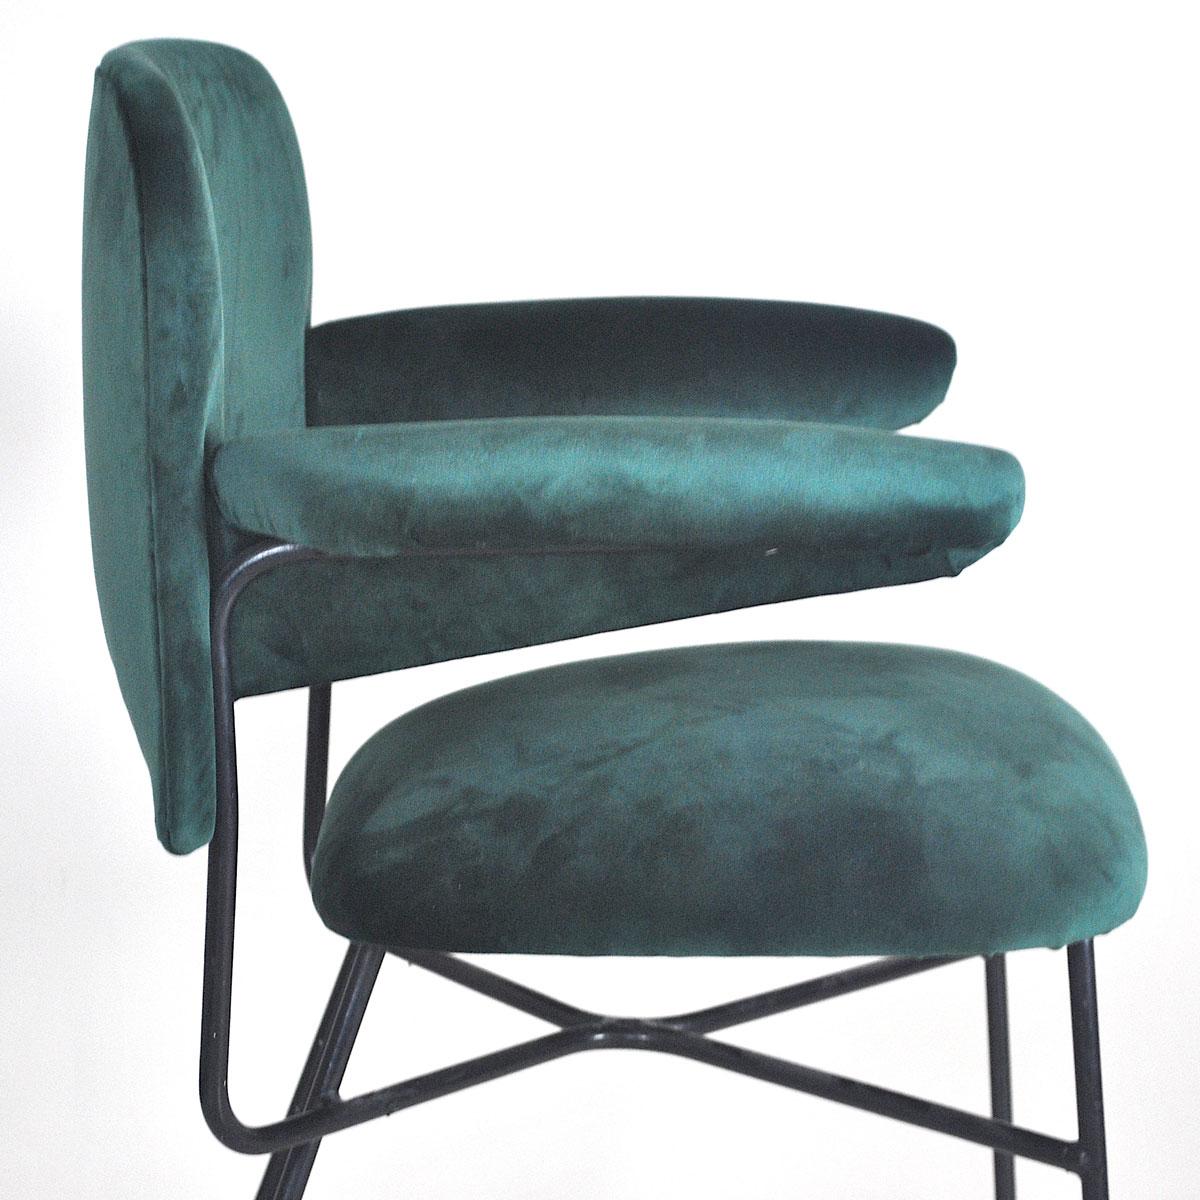 Studio BBPR Set of Two Italian Chairs Urania Model 9